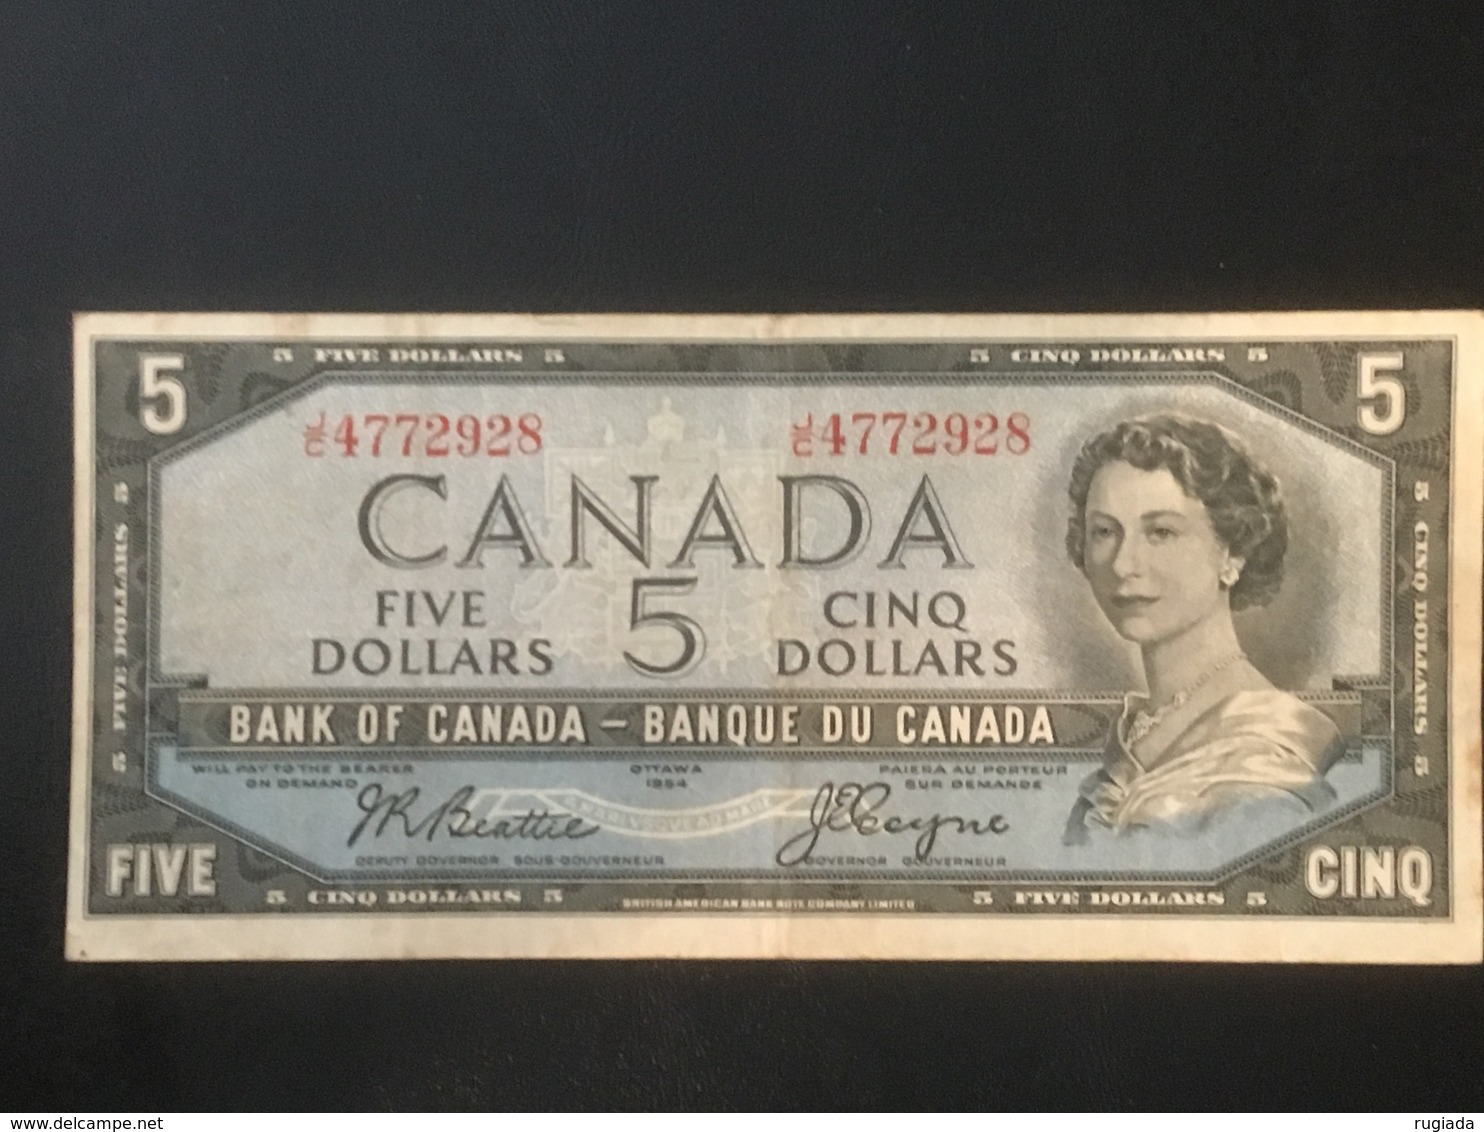 1954 Canada $5 Dollars Banknote - Very Fine - Canada